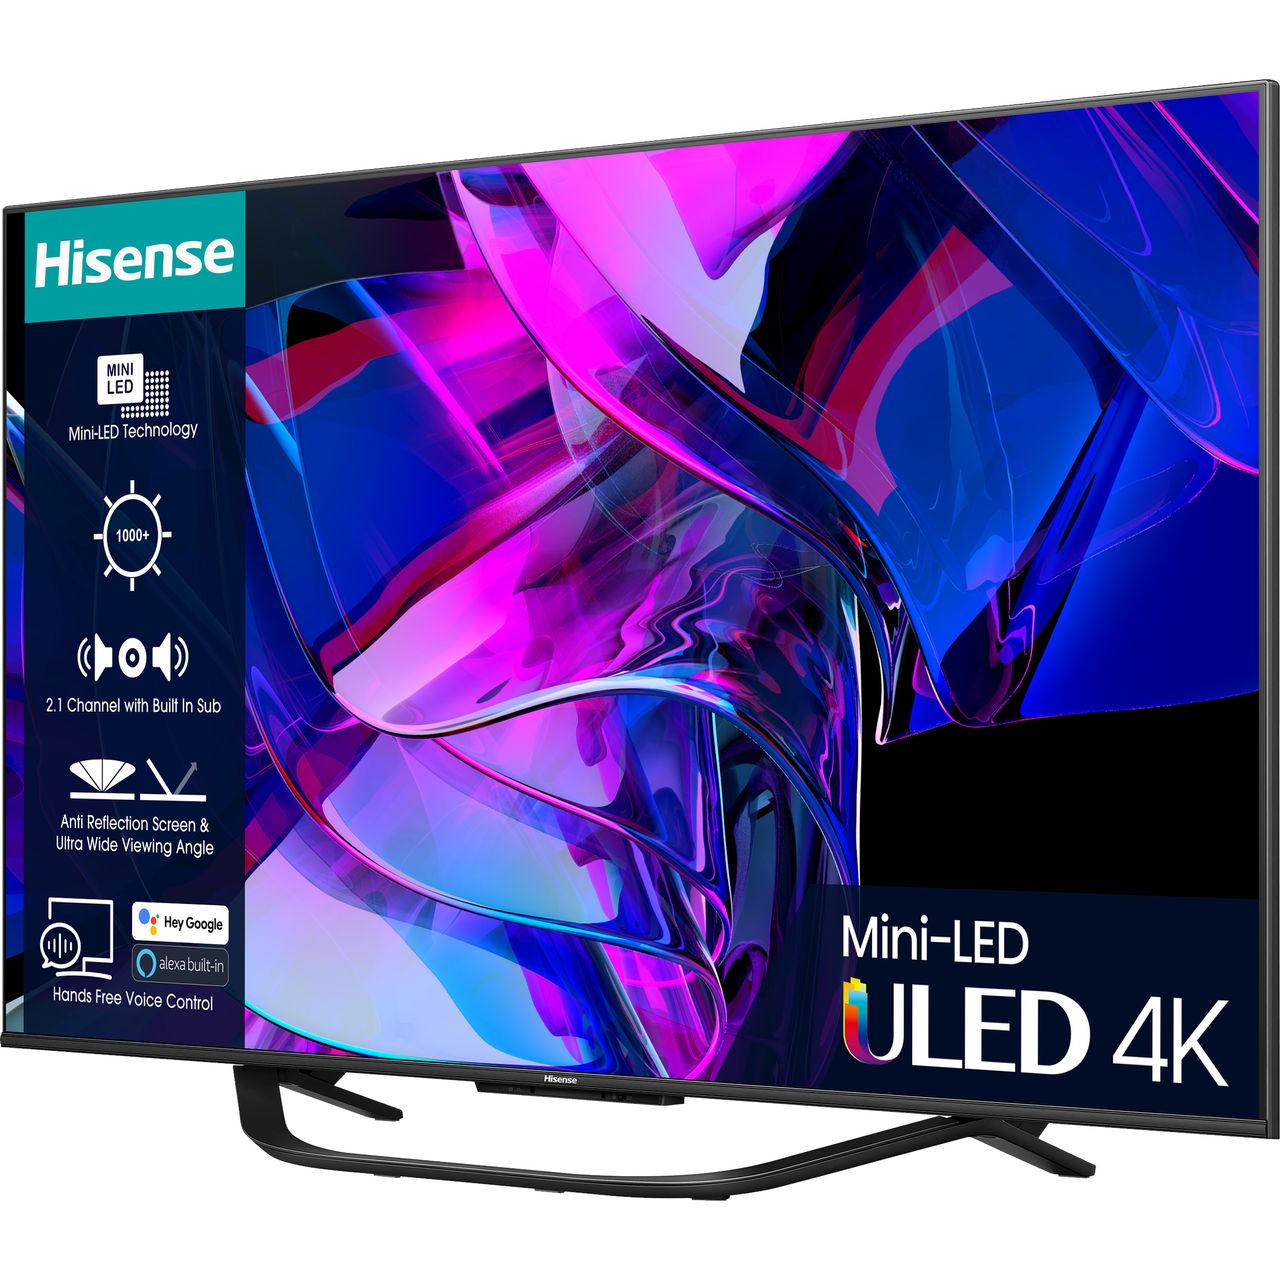 Hisense U7K Mini LED TV Review: Explore Outstanding Picture Clarity - VM-One